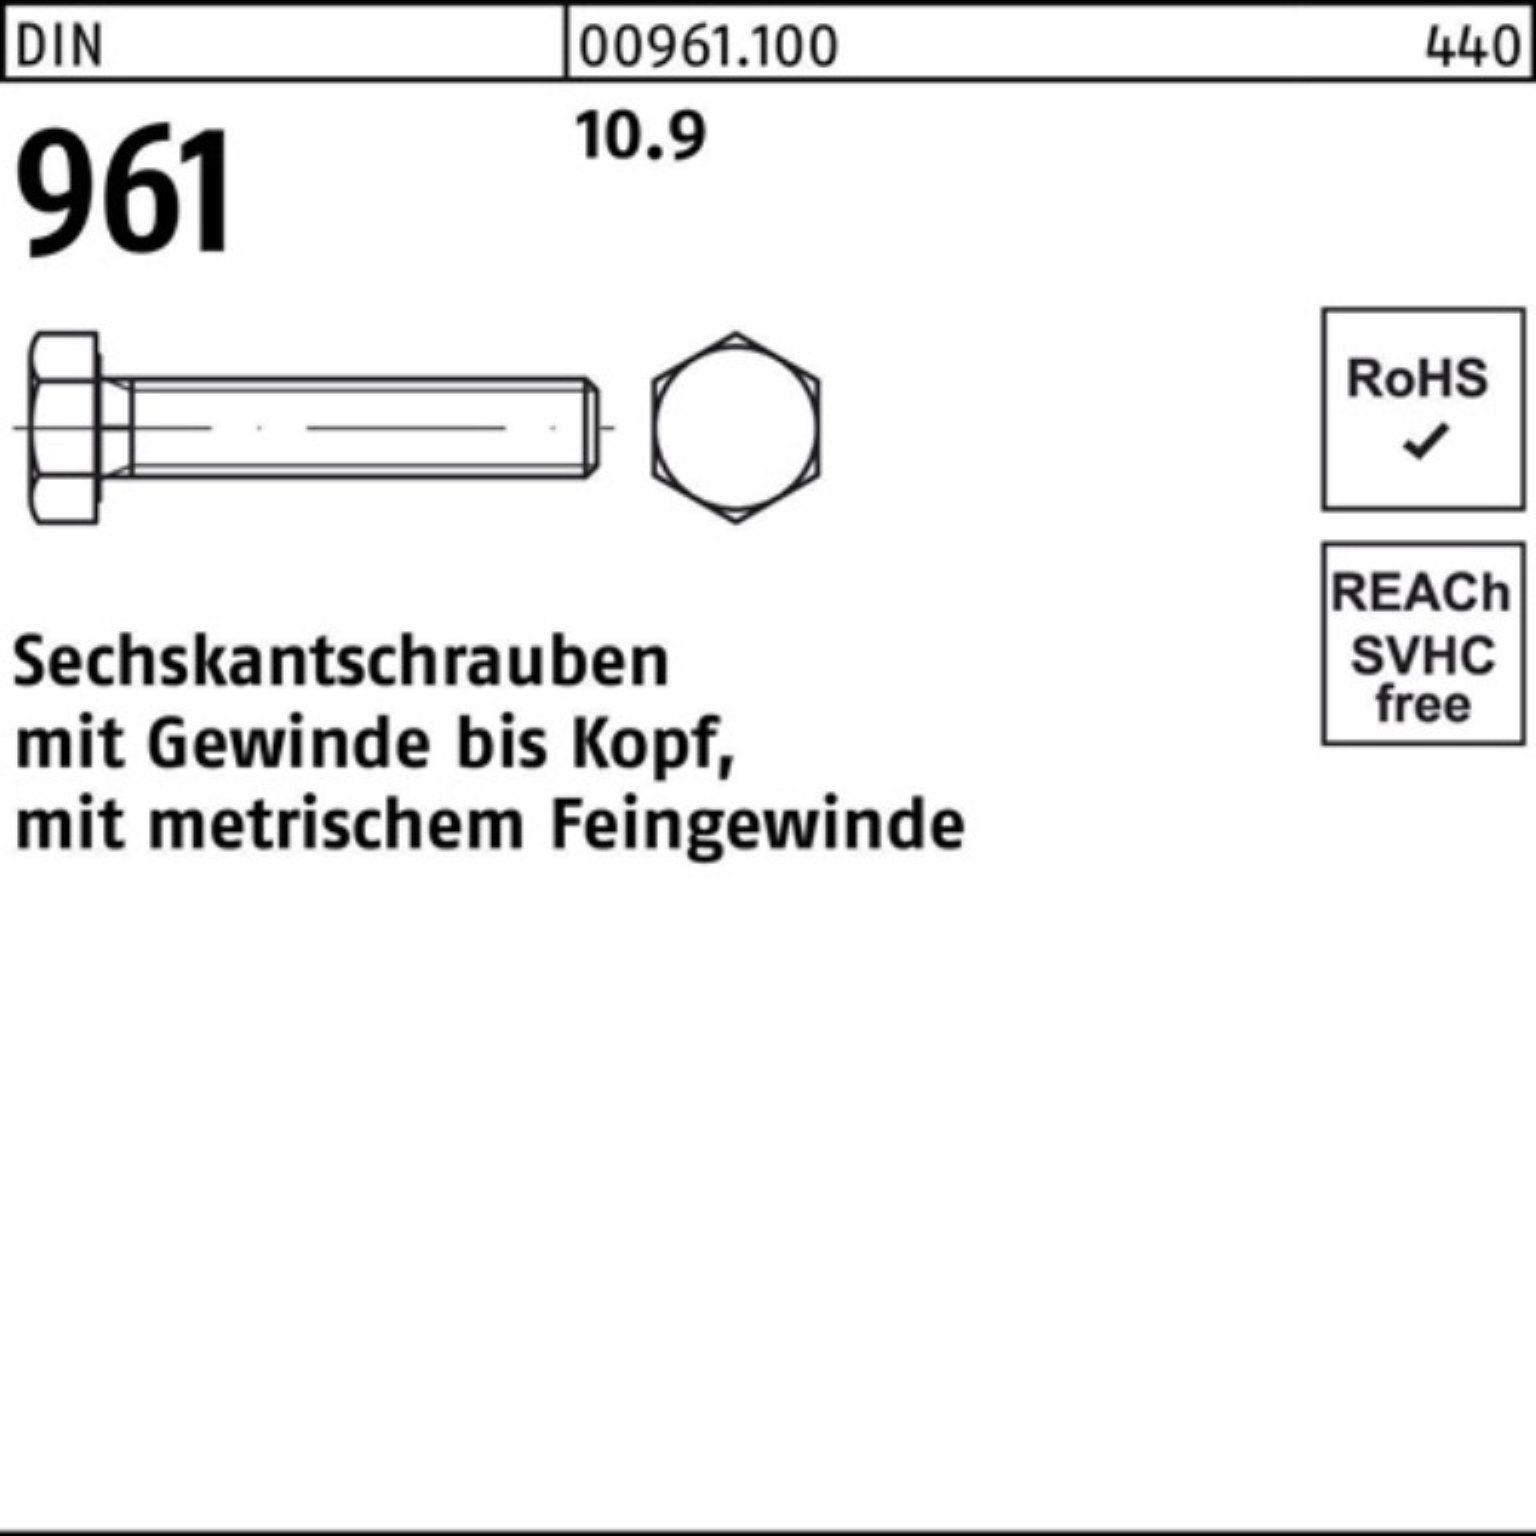 Reyher Sechskantschraube 100er Pack Sechskantschraube 961 DIN M12x1,5x 100 DI 10.9 Stück 50 VG